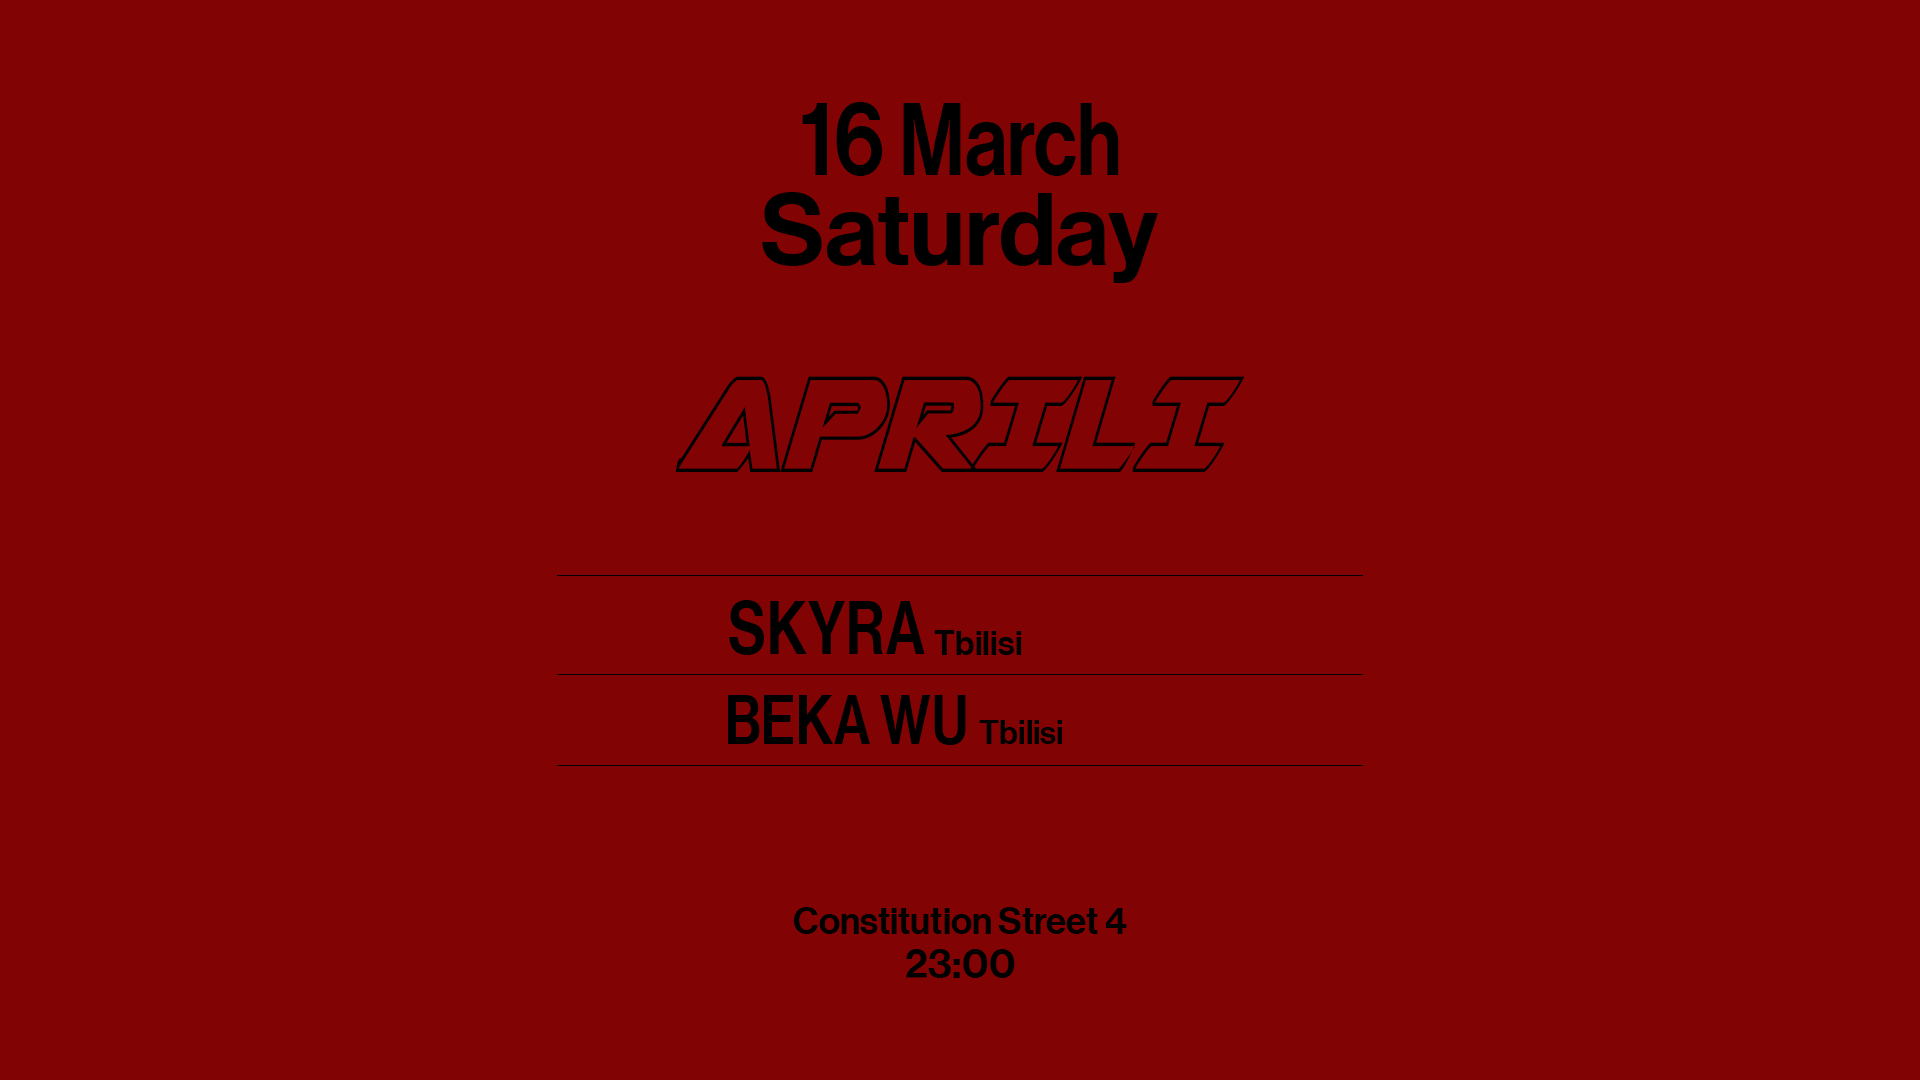 Aprili-skyra/Beka Wu - フライヤー表